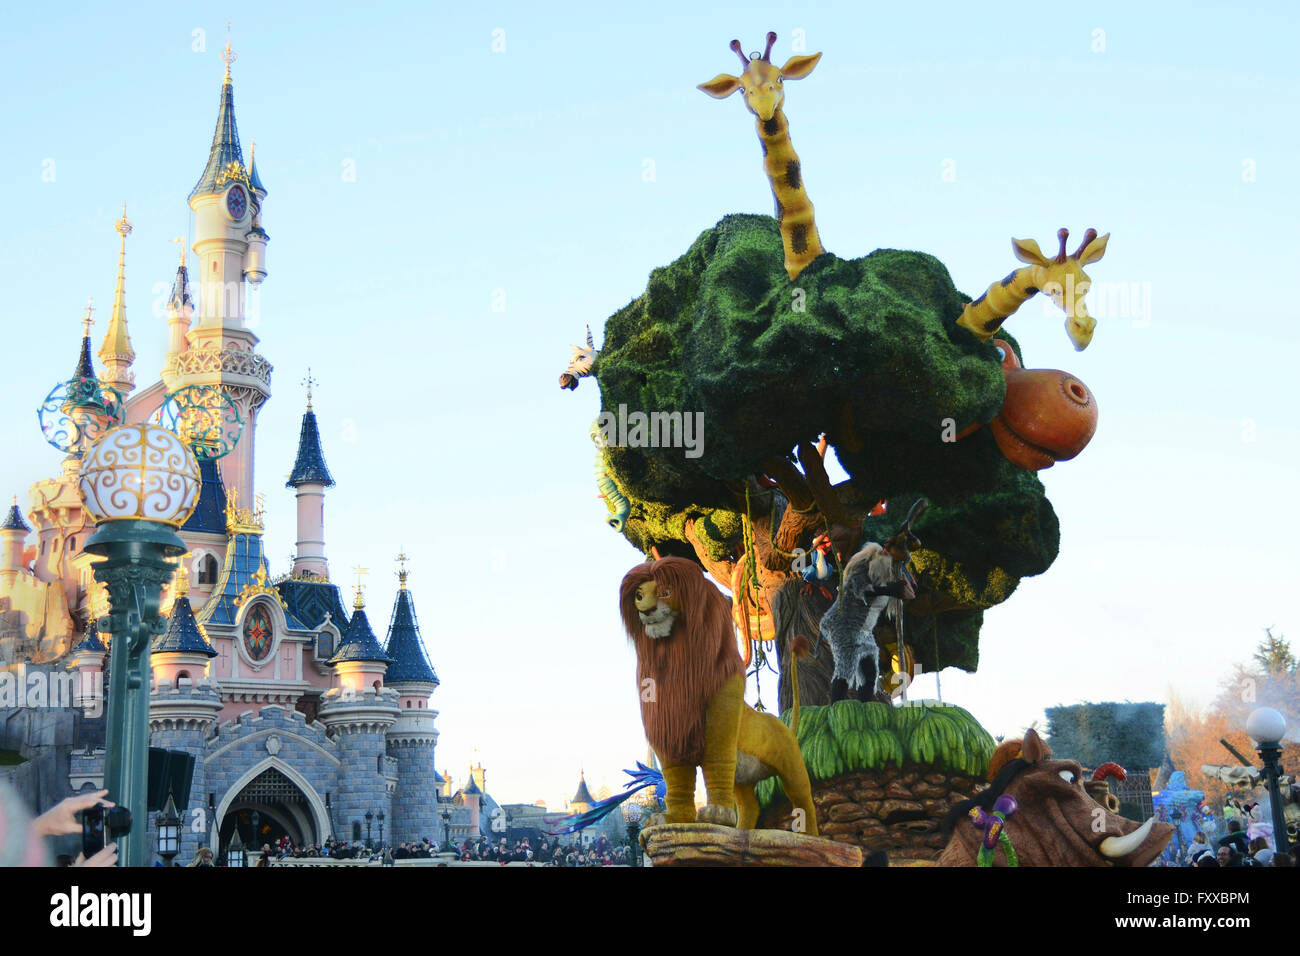 Disney parade - Lion king and cinderellas castle Stock Photo